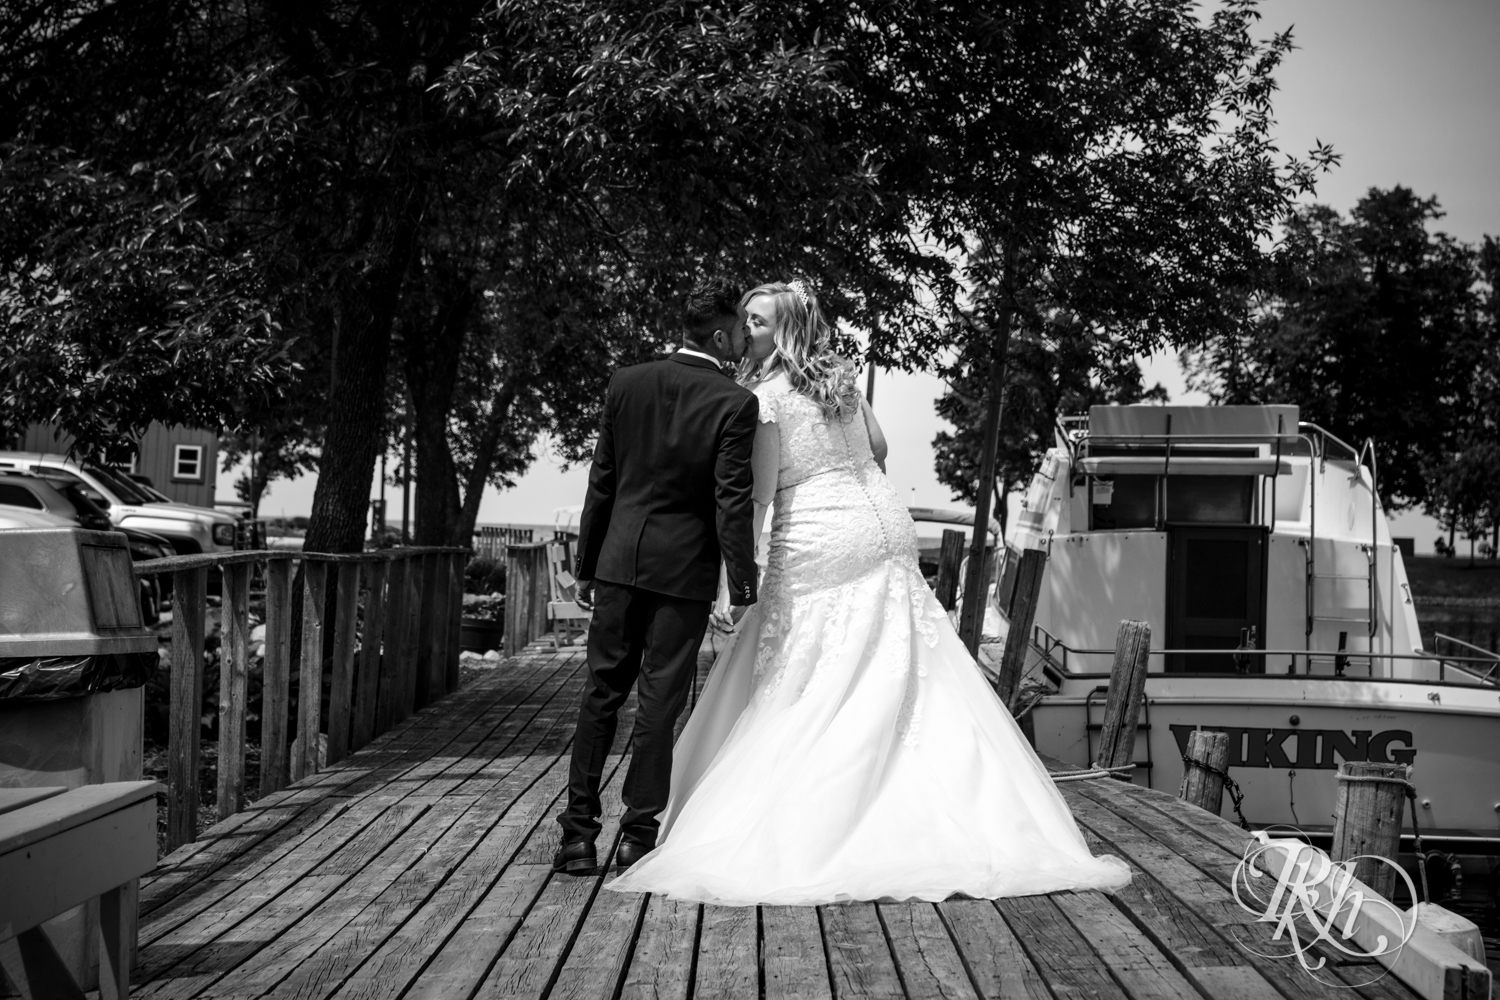 Bride and groom kiss on a dock at Izatys Resort in Onamia, Minnesota.